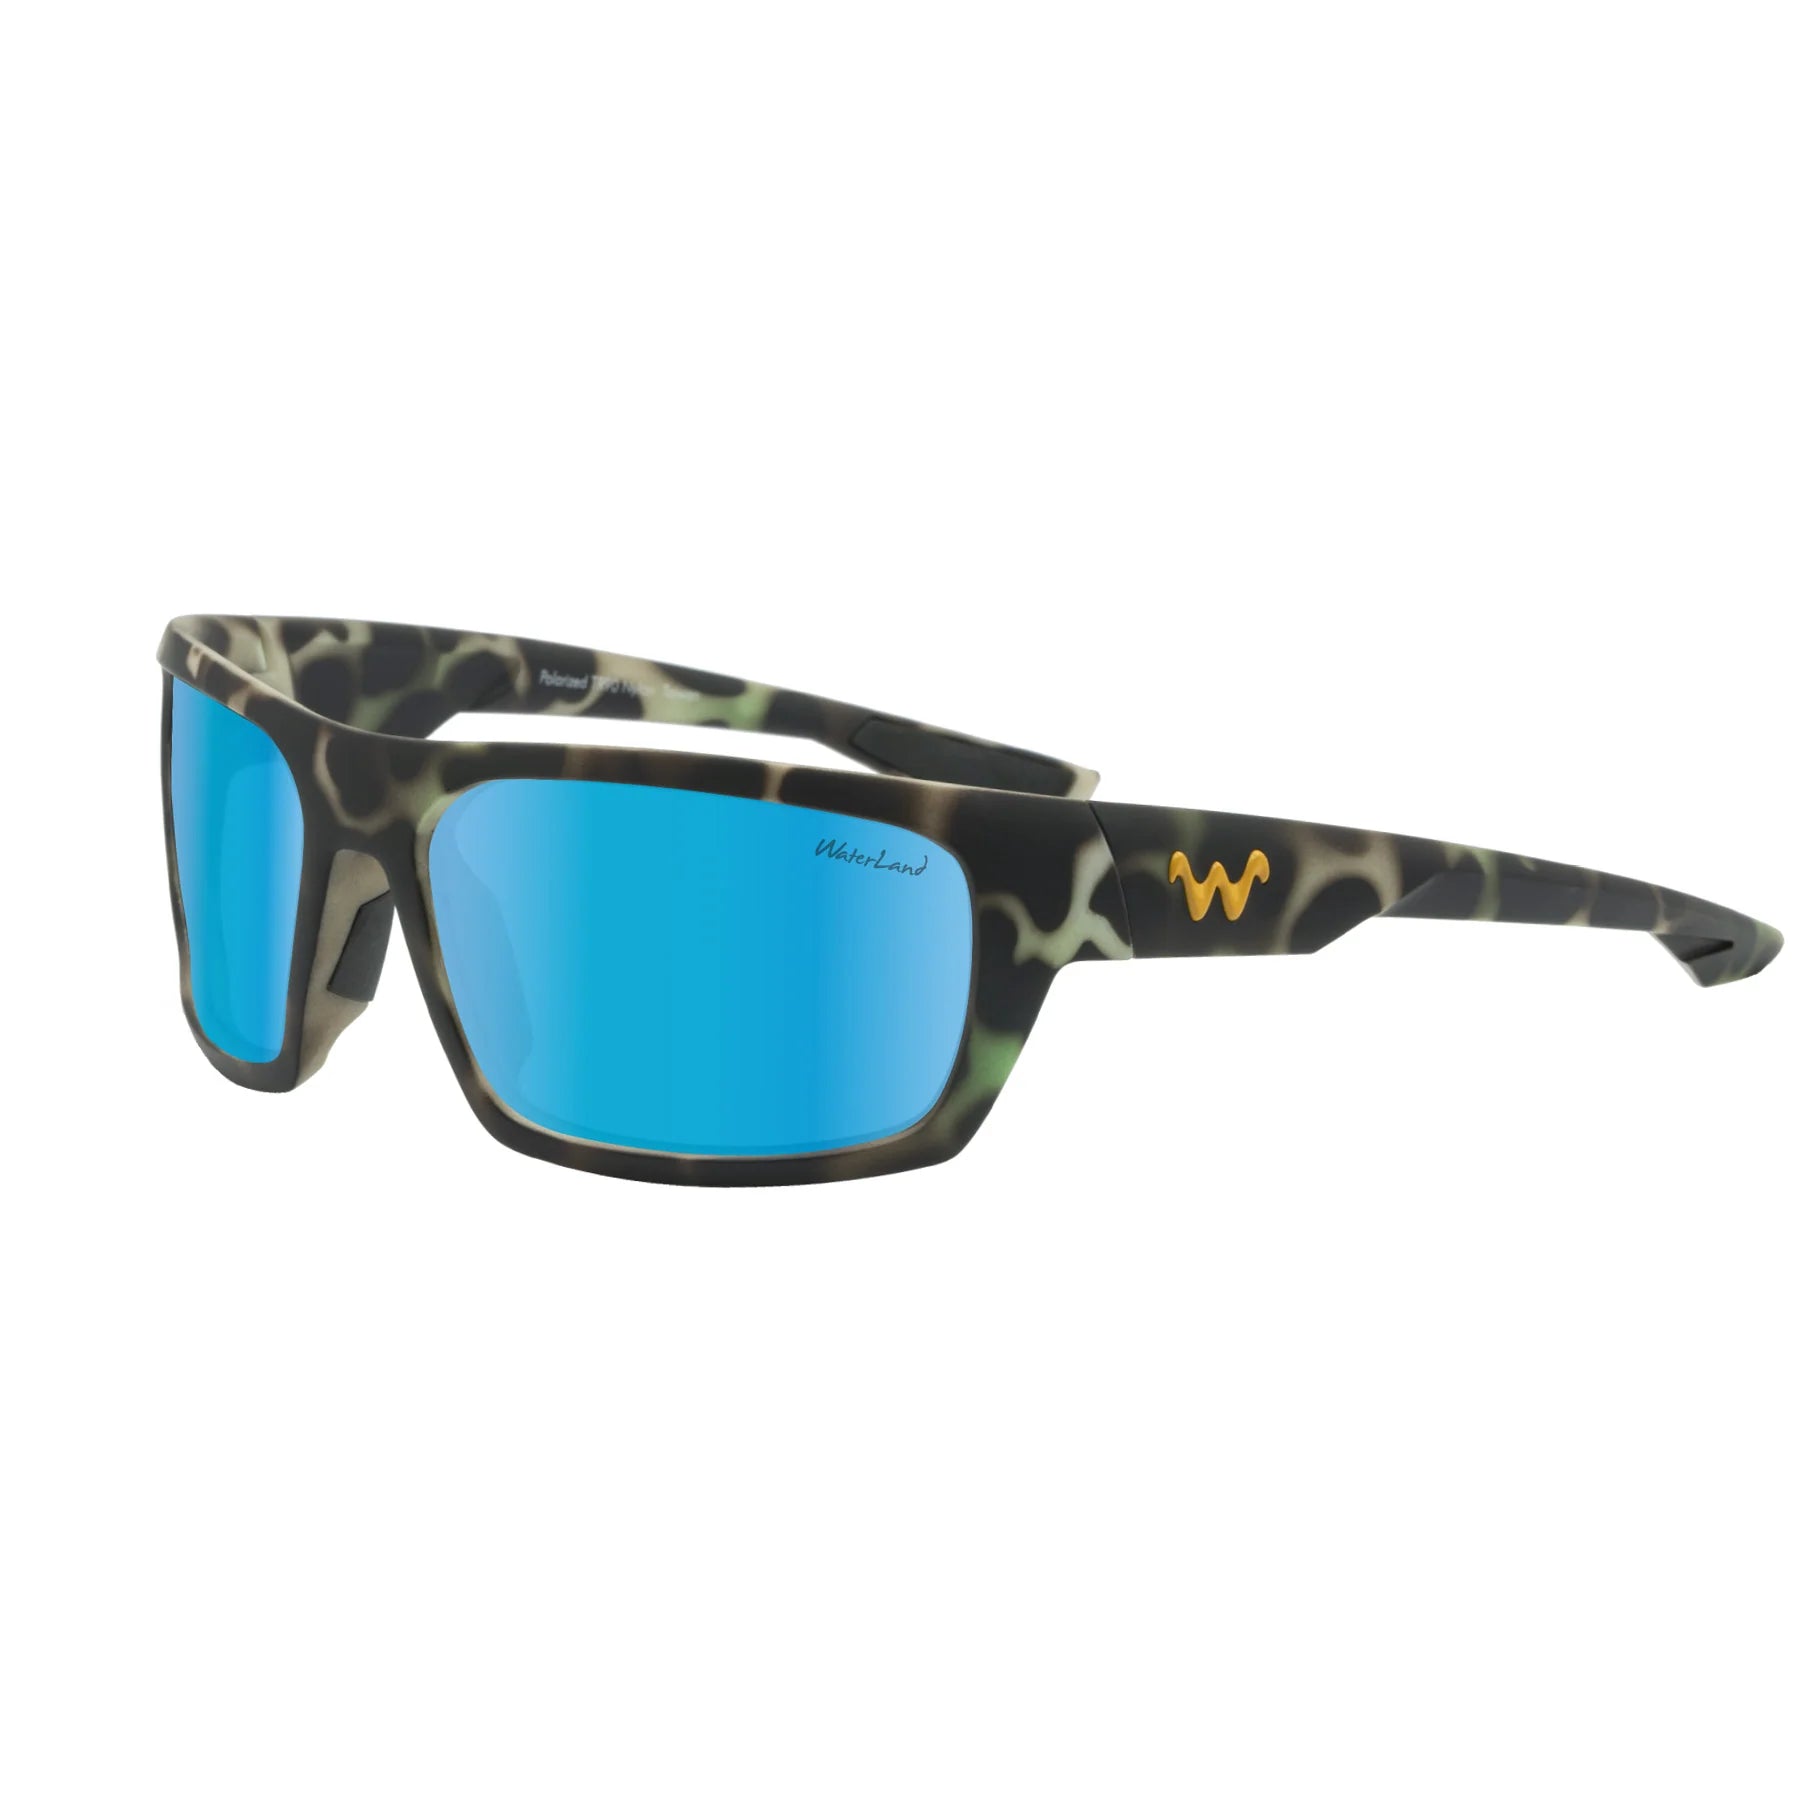 Waterland Milliken Sunglasses